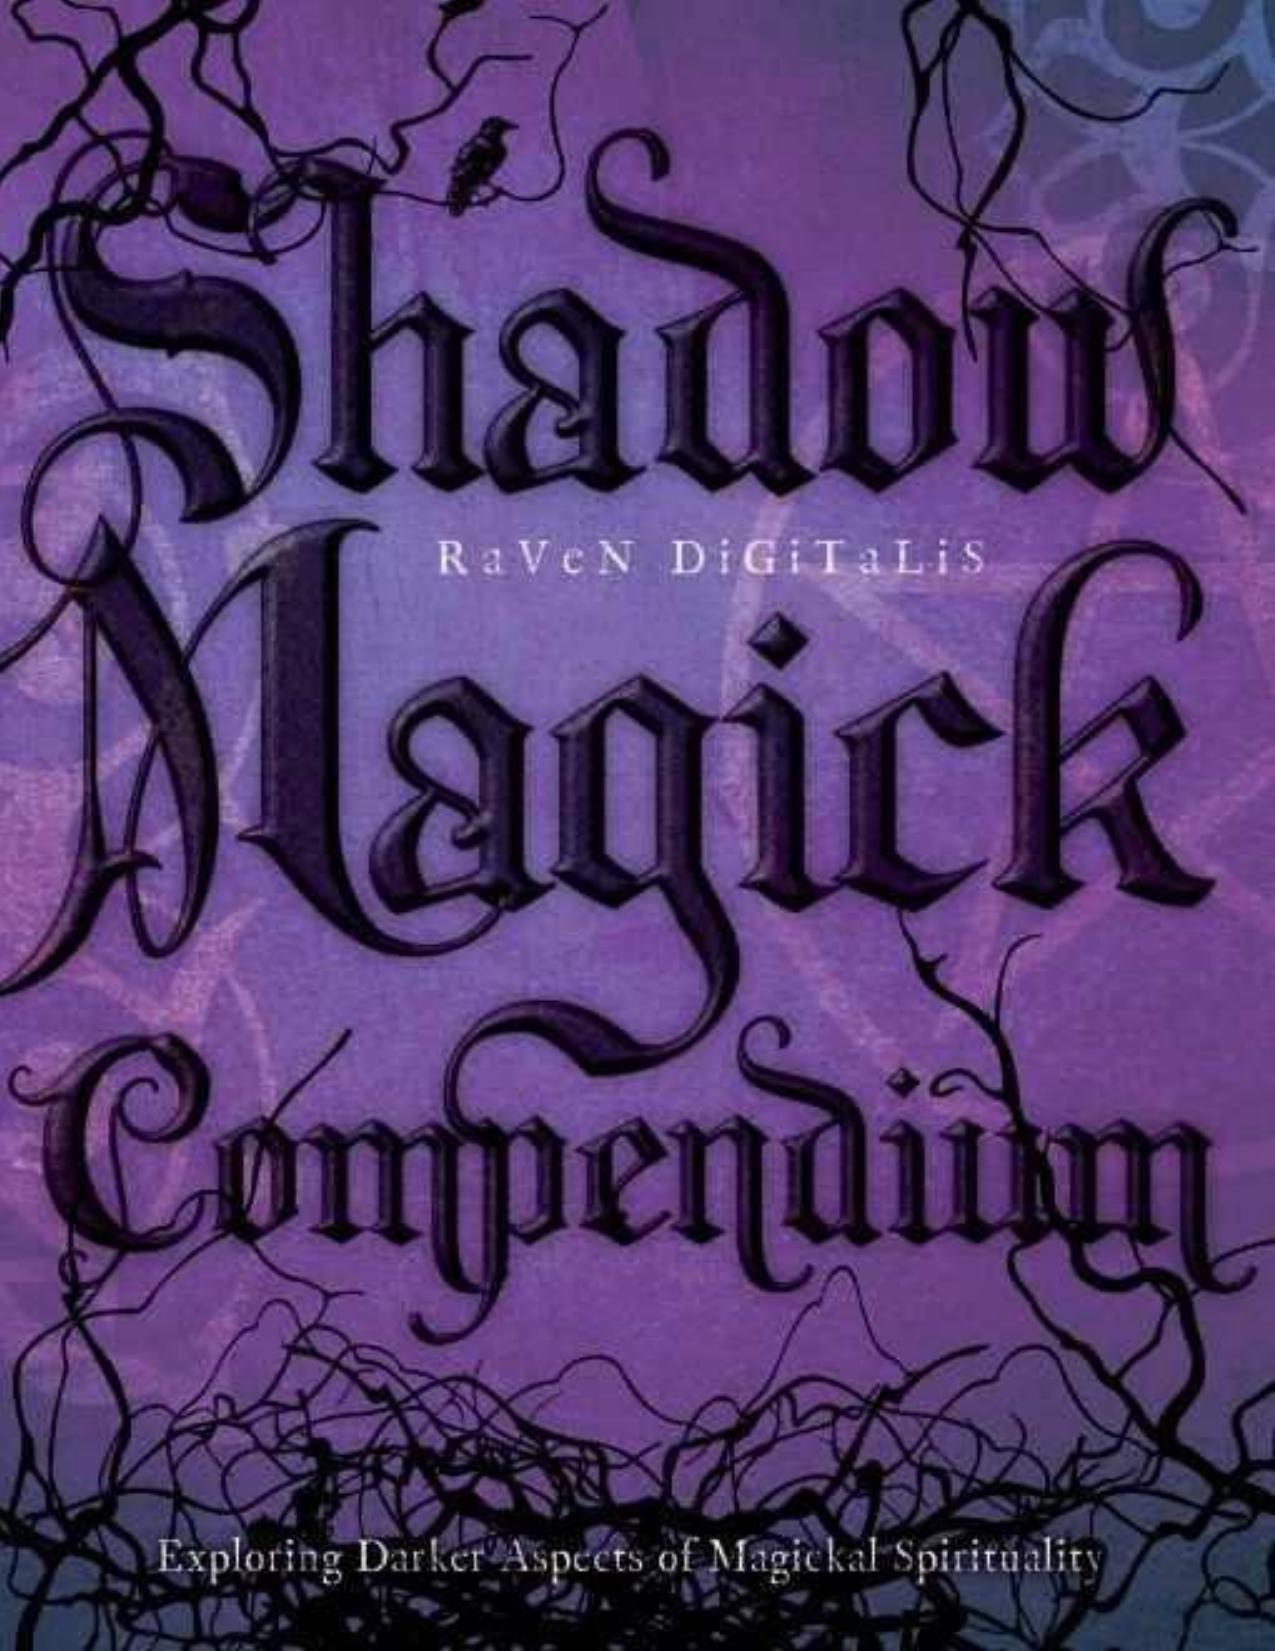 Shadow Magick Compendium: Exploring Darker Aspects of Magickal Spirituality by Raven Digitalis